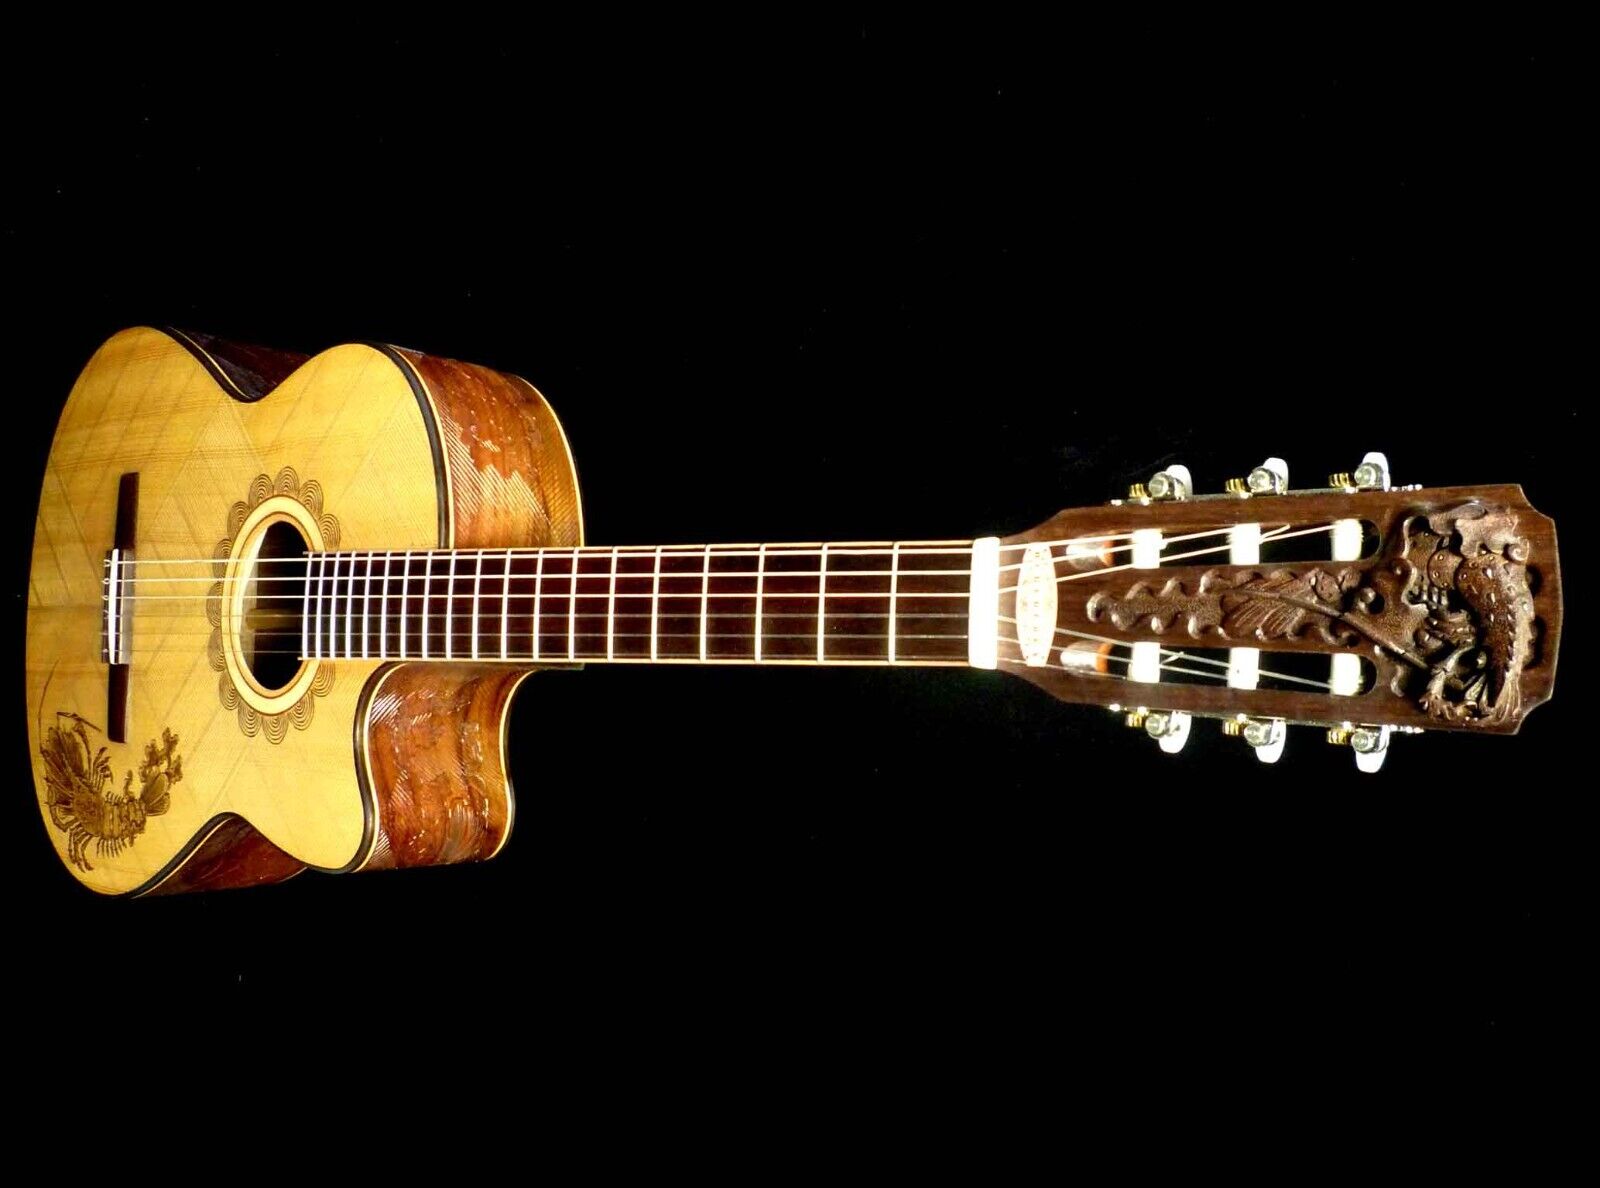 Blueberry Handmade Classical Guitar Nylon Strings Built to Order in 80-Days  - Blueberry Guitars